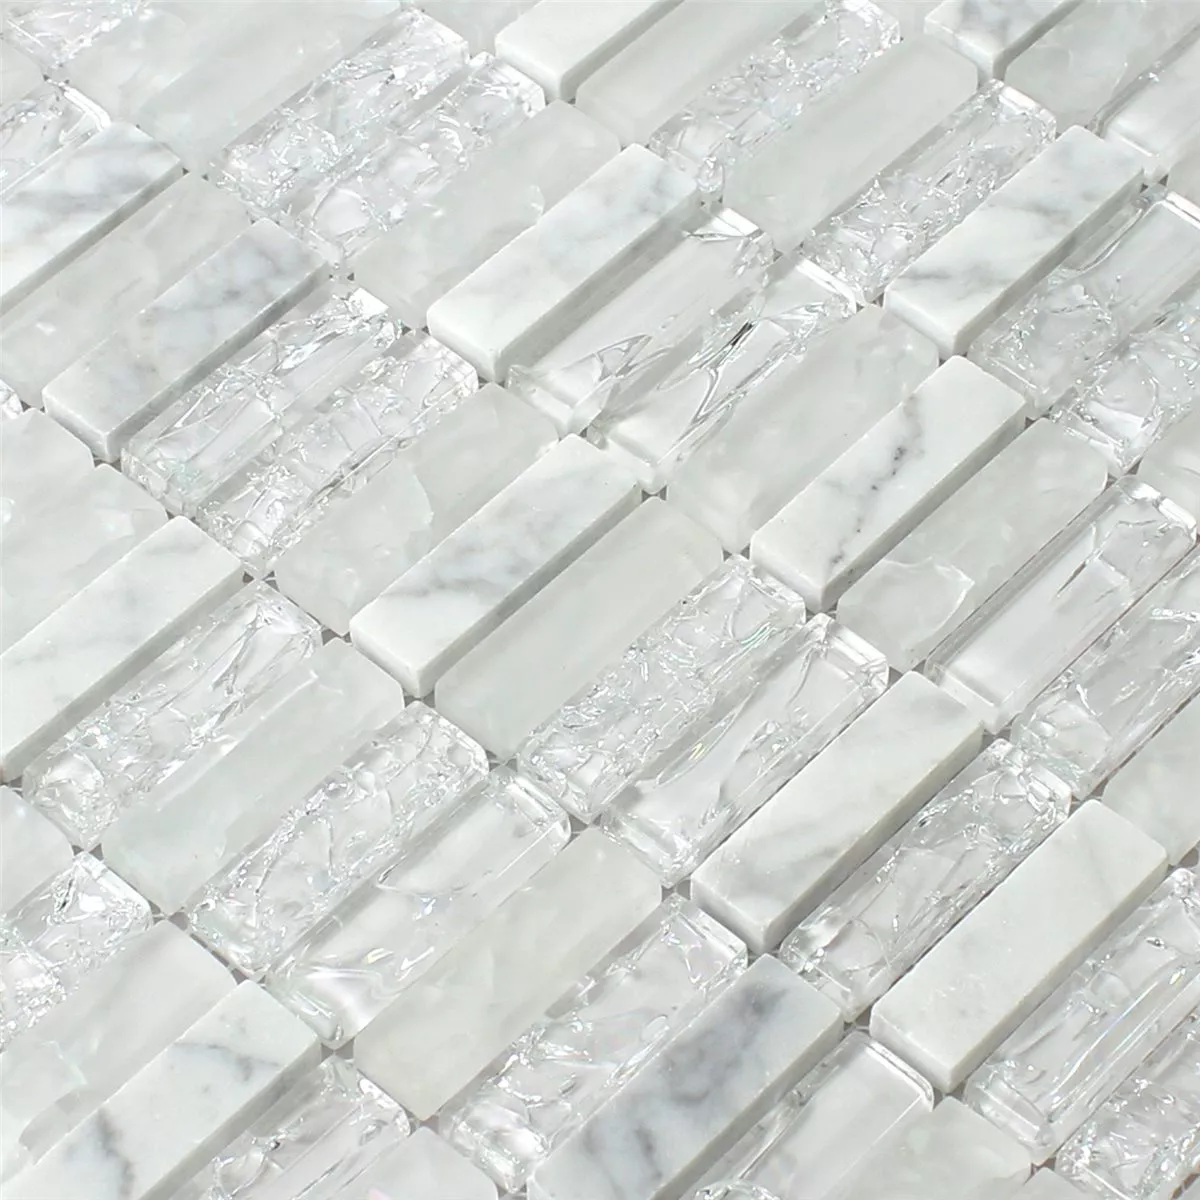 Sample Mosaic Tiles Glass Natural Stone Sticks Broken White